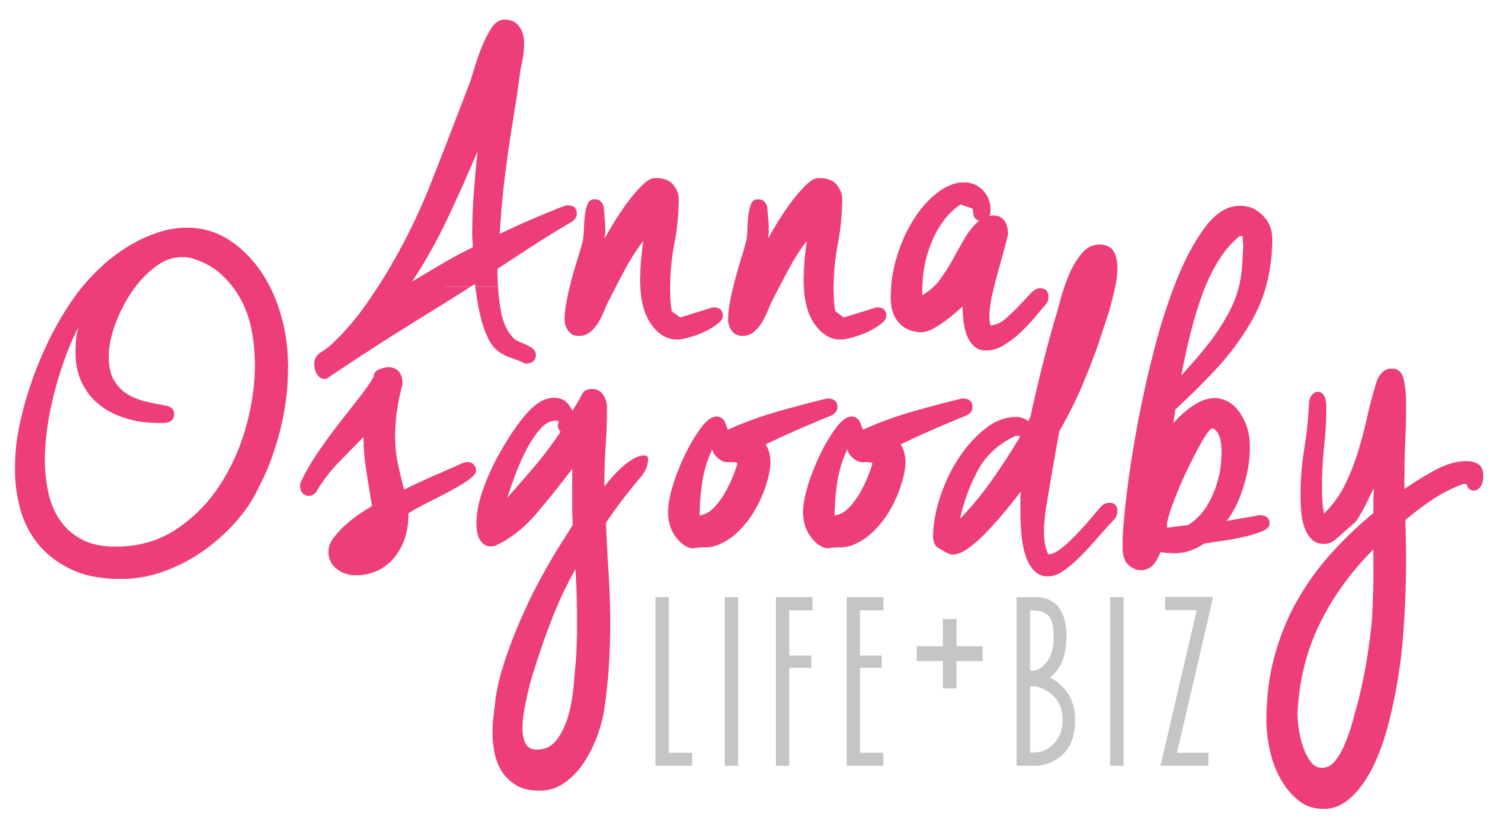 Anna Osgoodby Life + Biz | Seattle Lifestyle Blogger & Goals Coach 